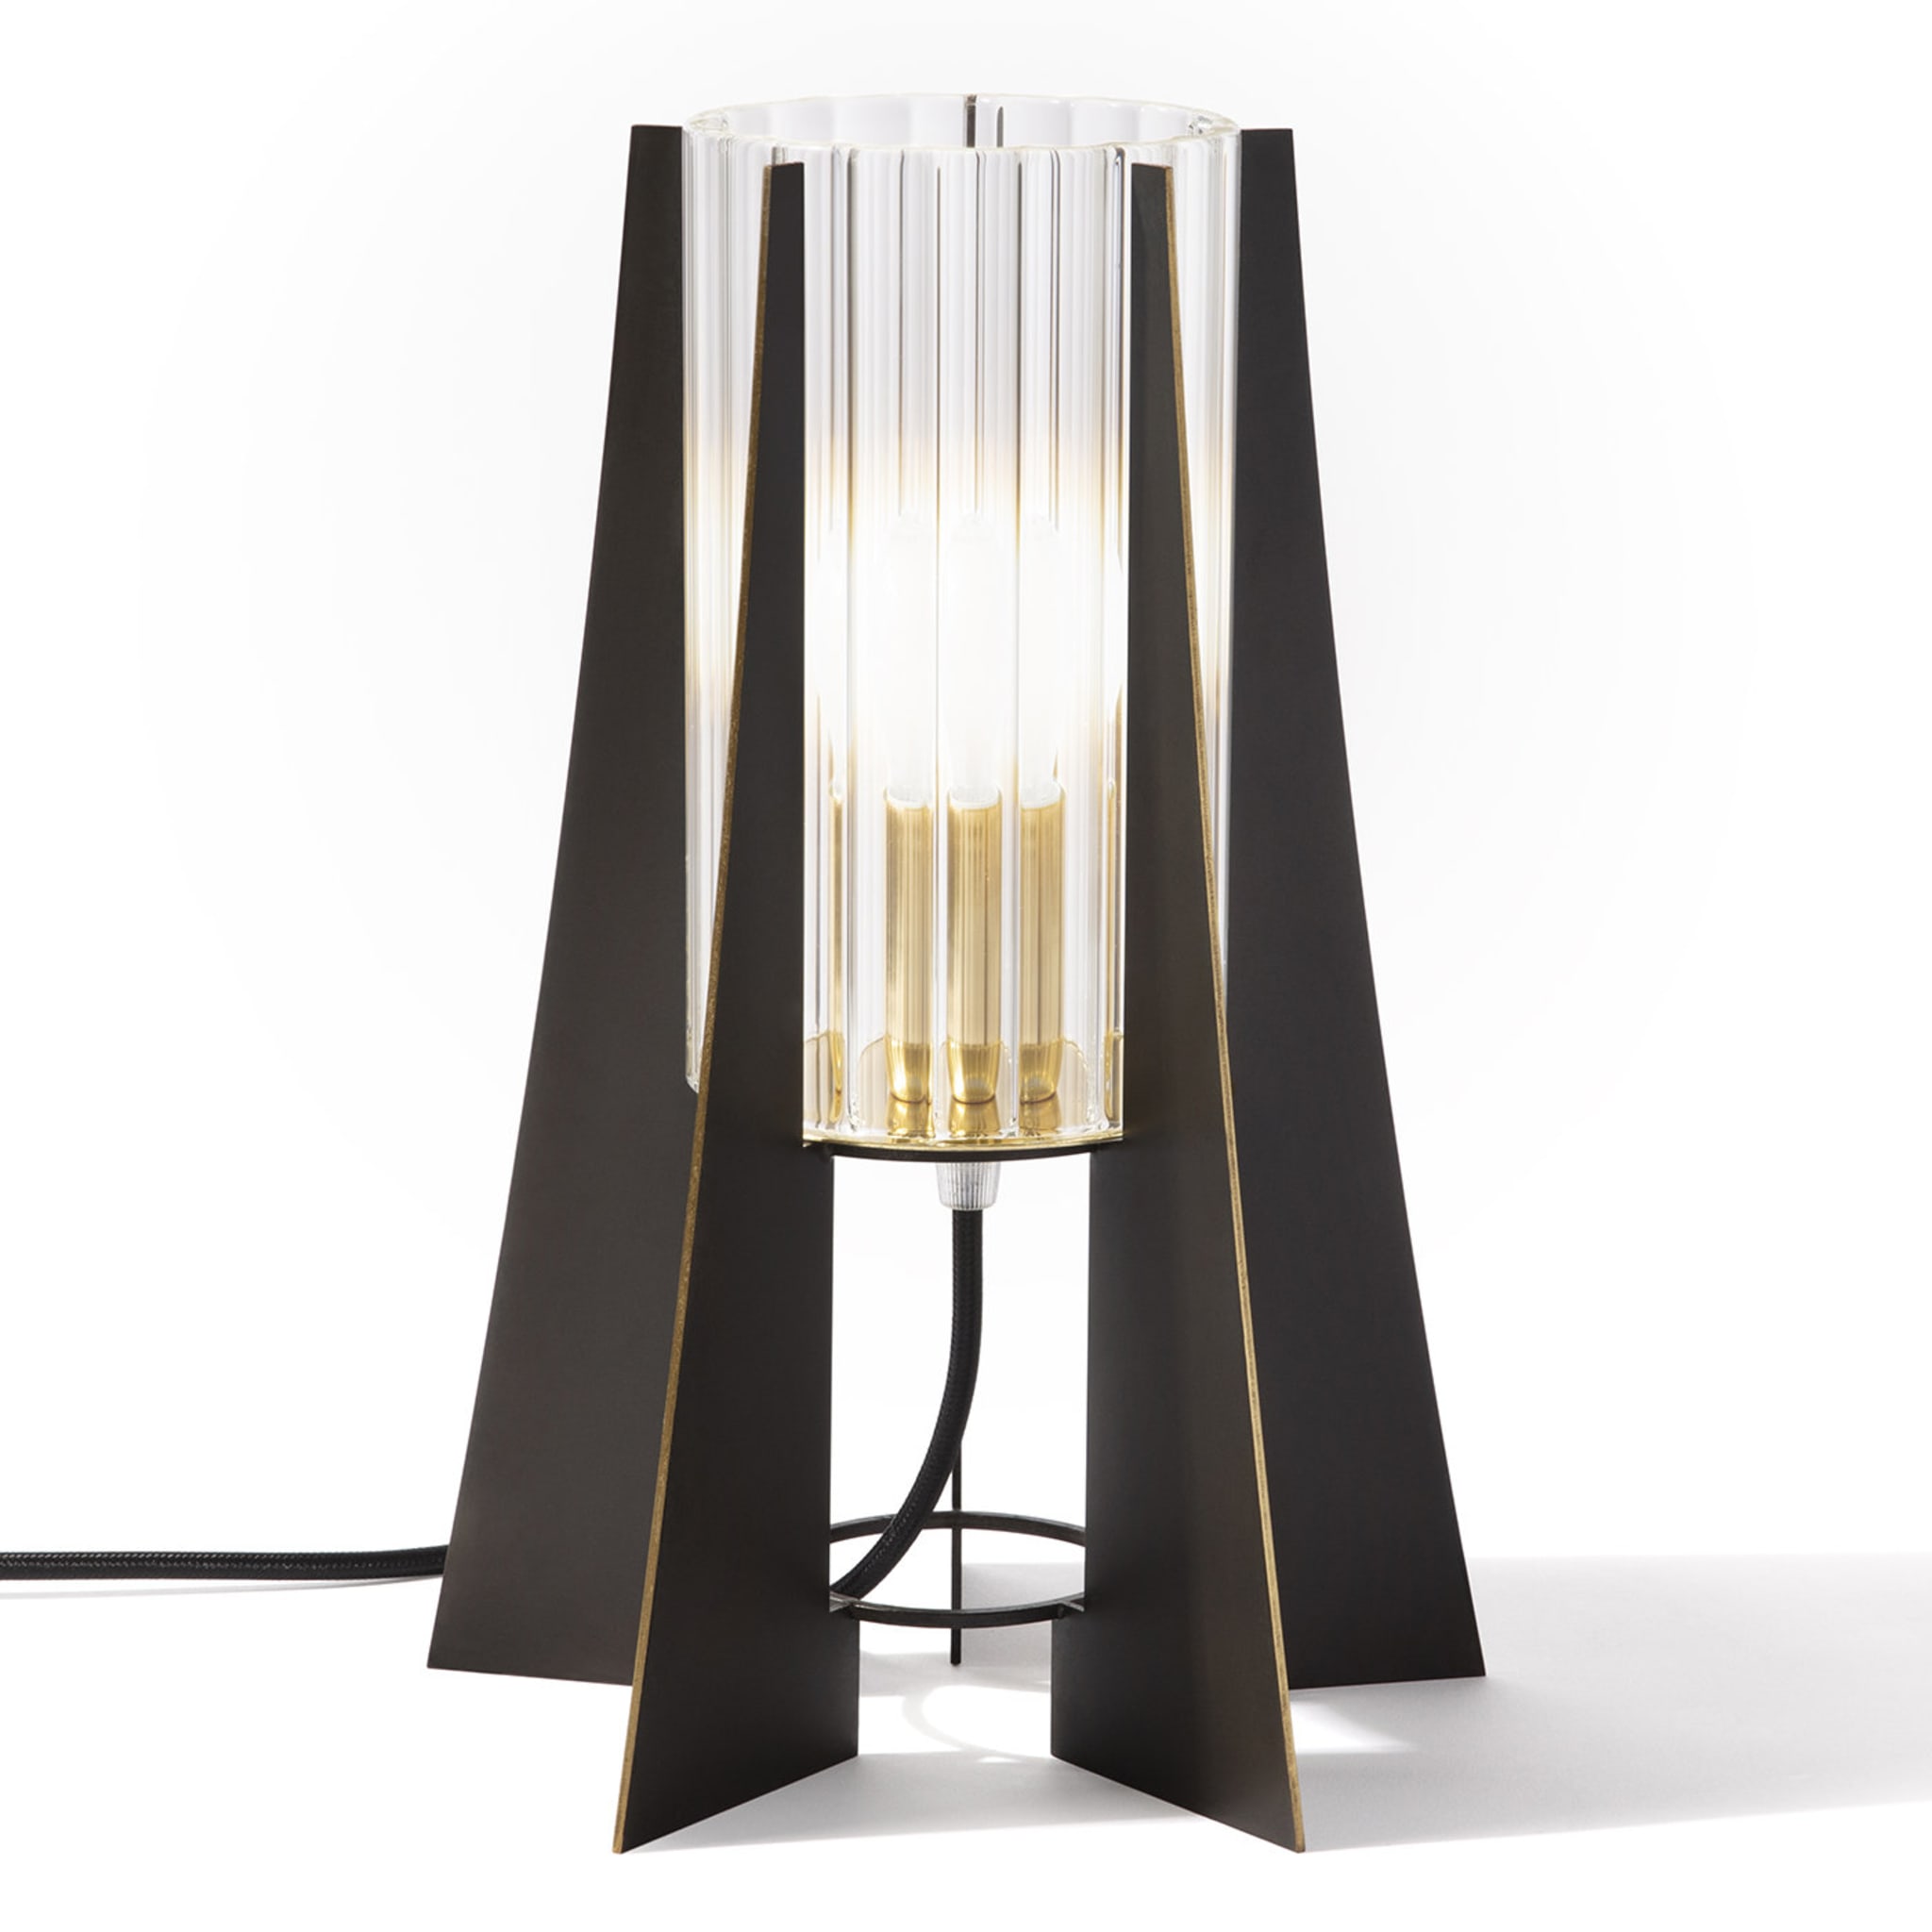 TPLG2 Black Brass Table Lamp by GoodMorning studio - Alternative view 1